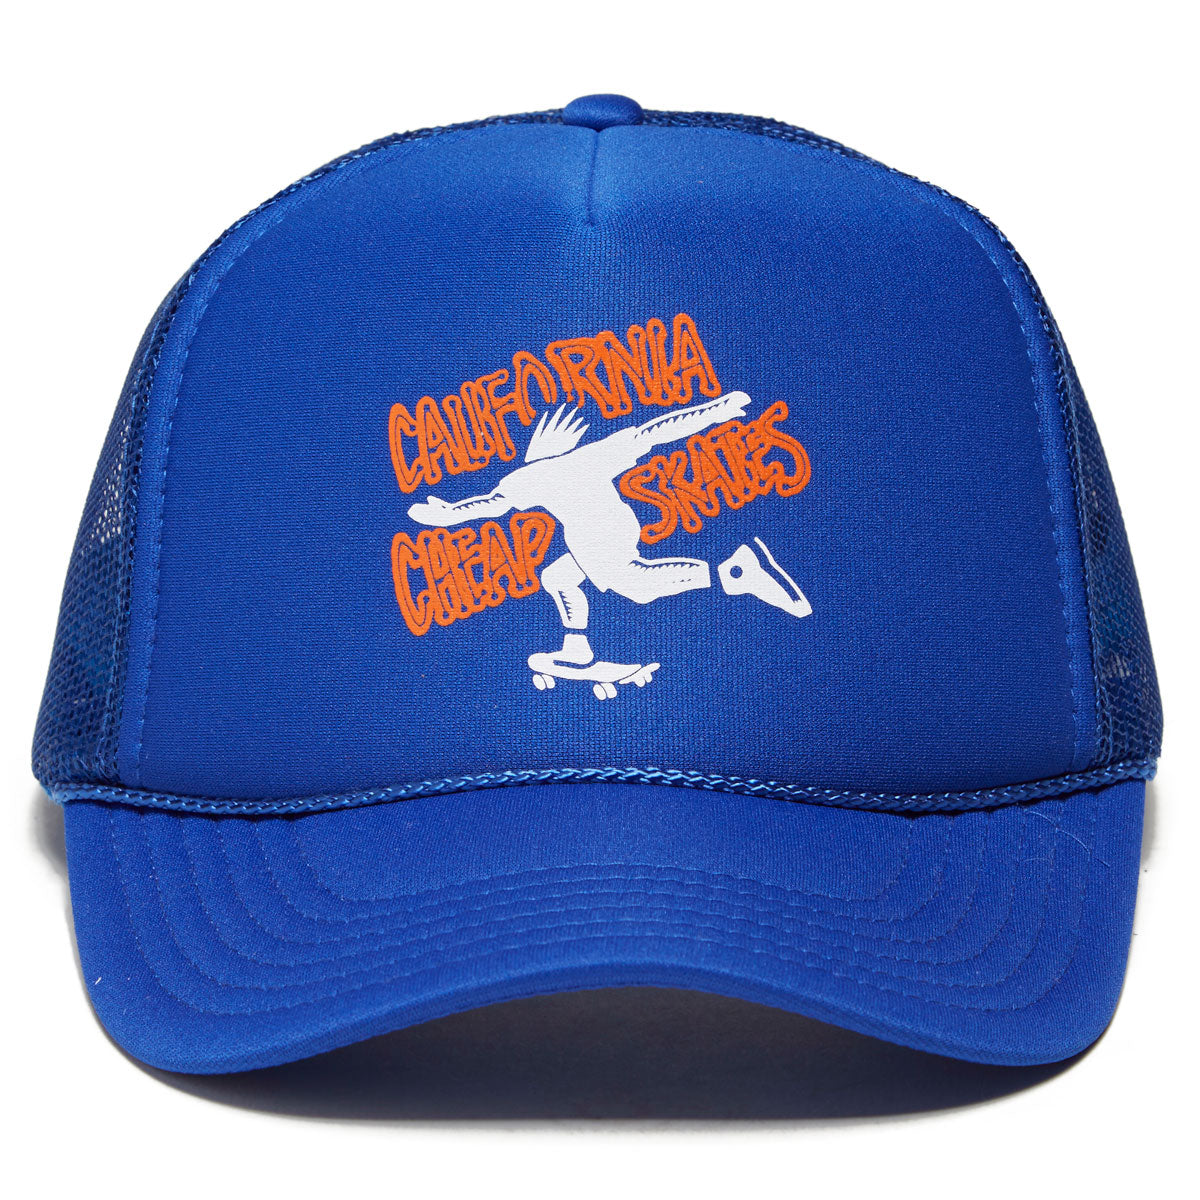 CCS Cheapskates Mesh Trucker Hat - Royal/White/Orange image 3